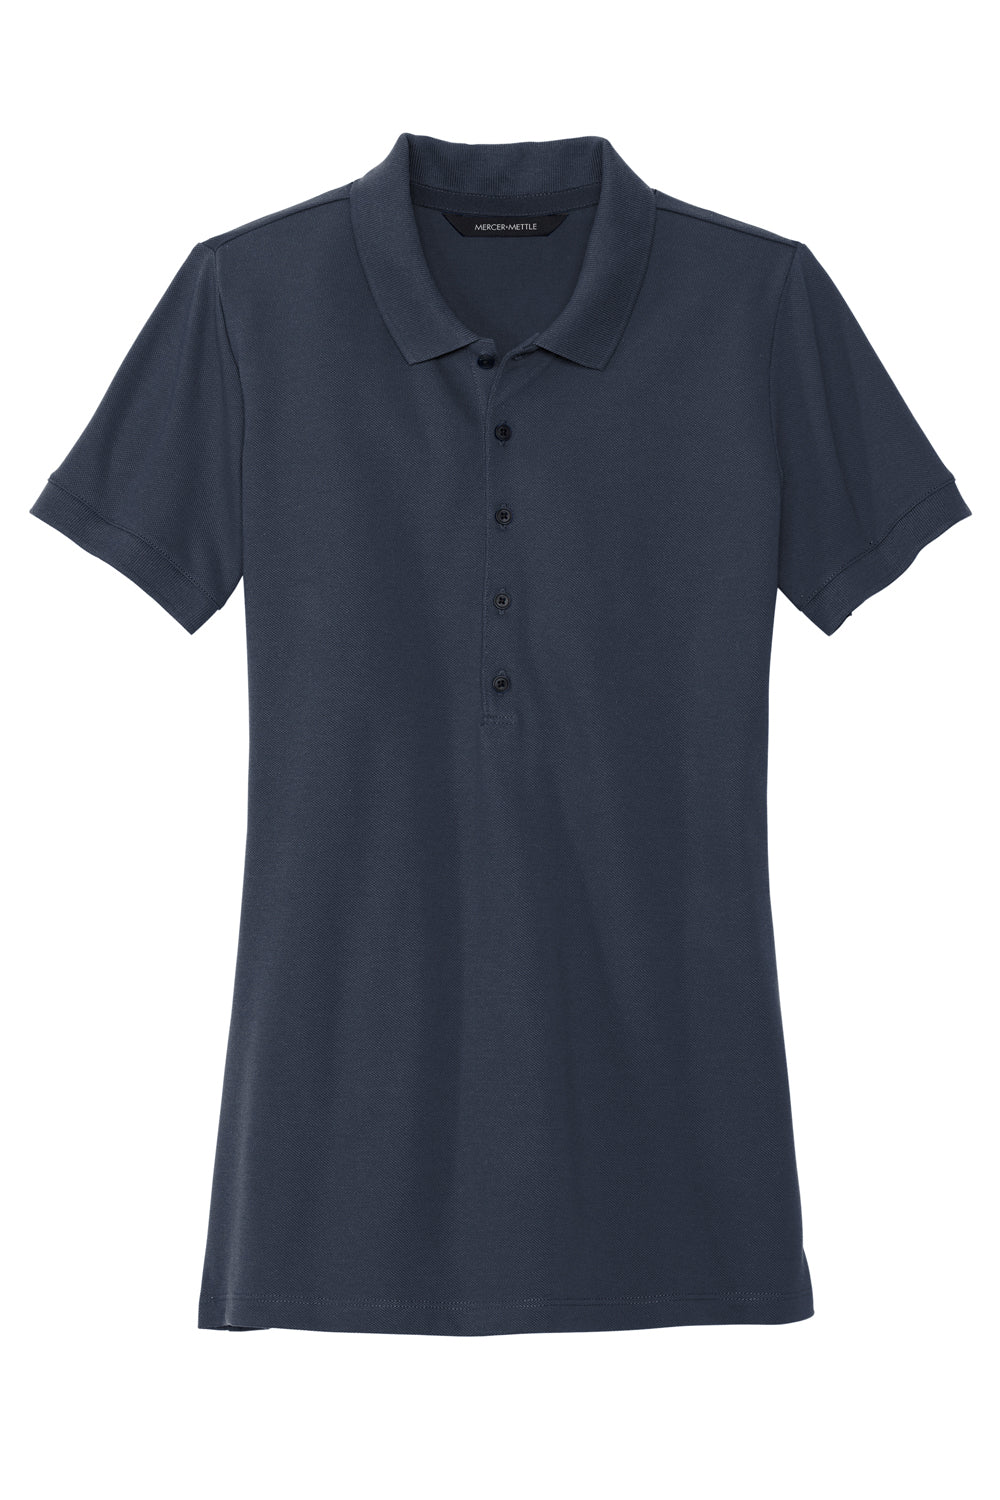 Mercer+Mettle MM1001 Stretch Pique Short Sleeve Polo Shirt Night Navy Blue Flat Front